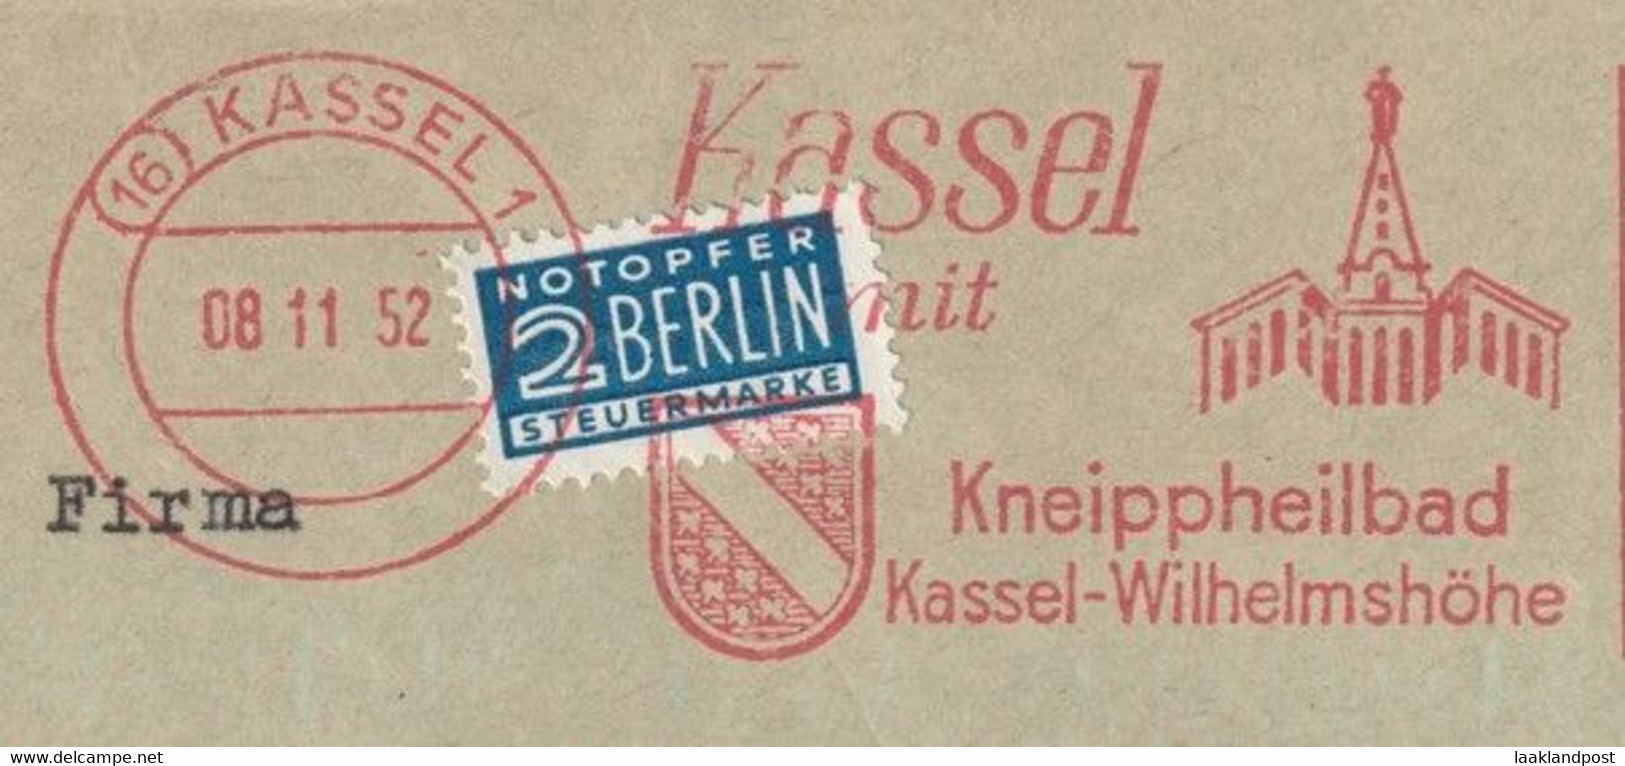 BRD Nice Cut Meter Kneippheilbad Kassel-Wilhelshohe, Kasel 8/11/1952 Notopfer Berlin Steuermark - Hydrotherapy